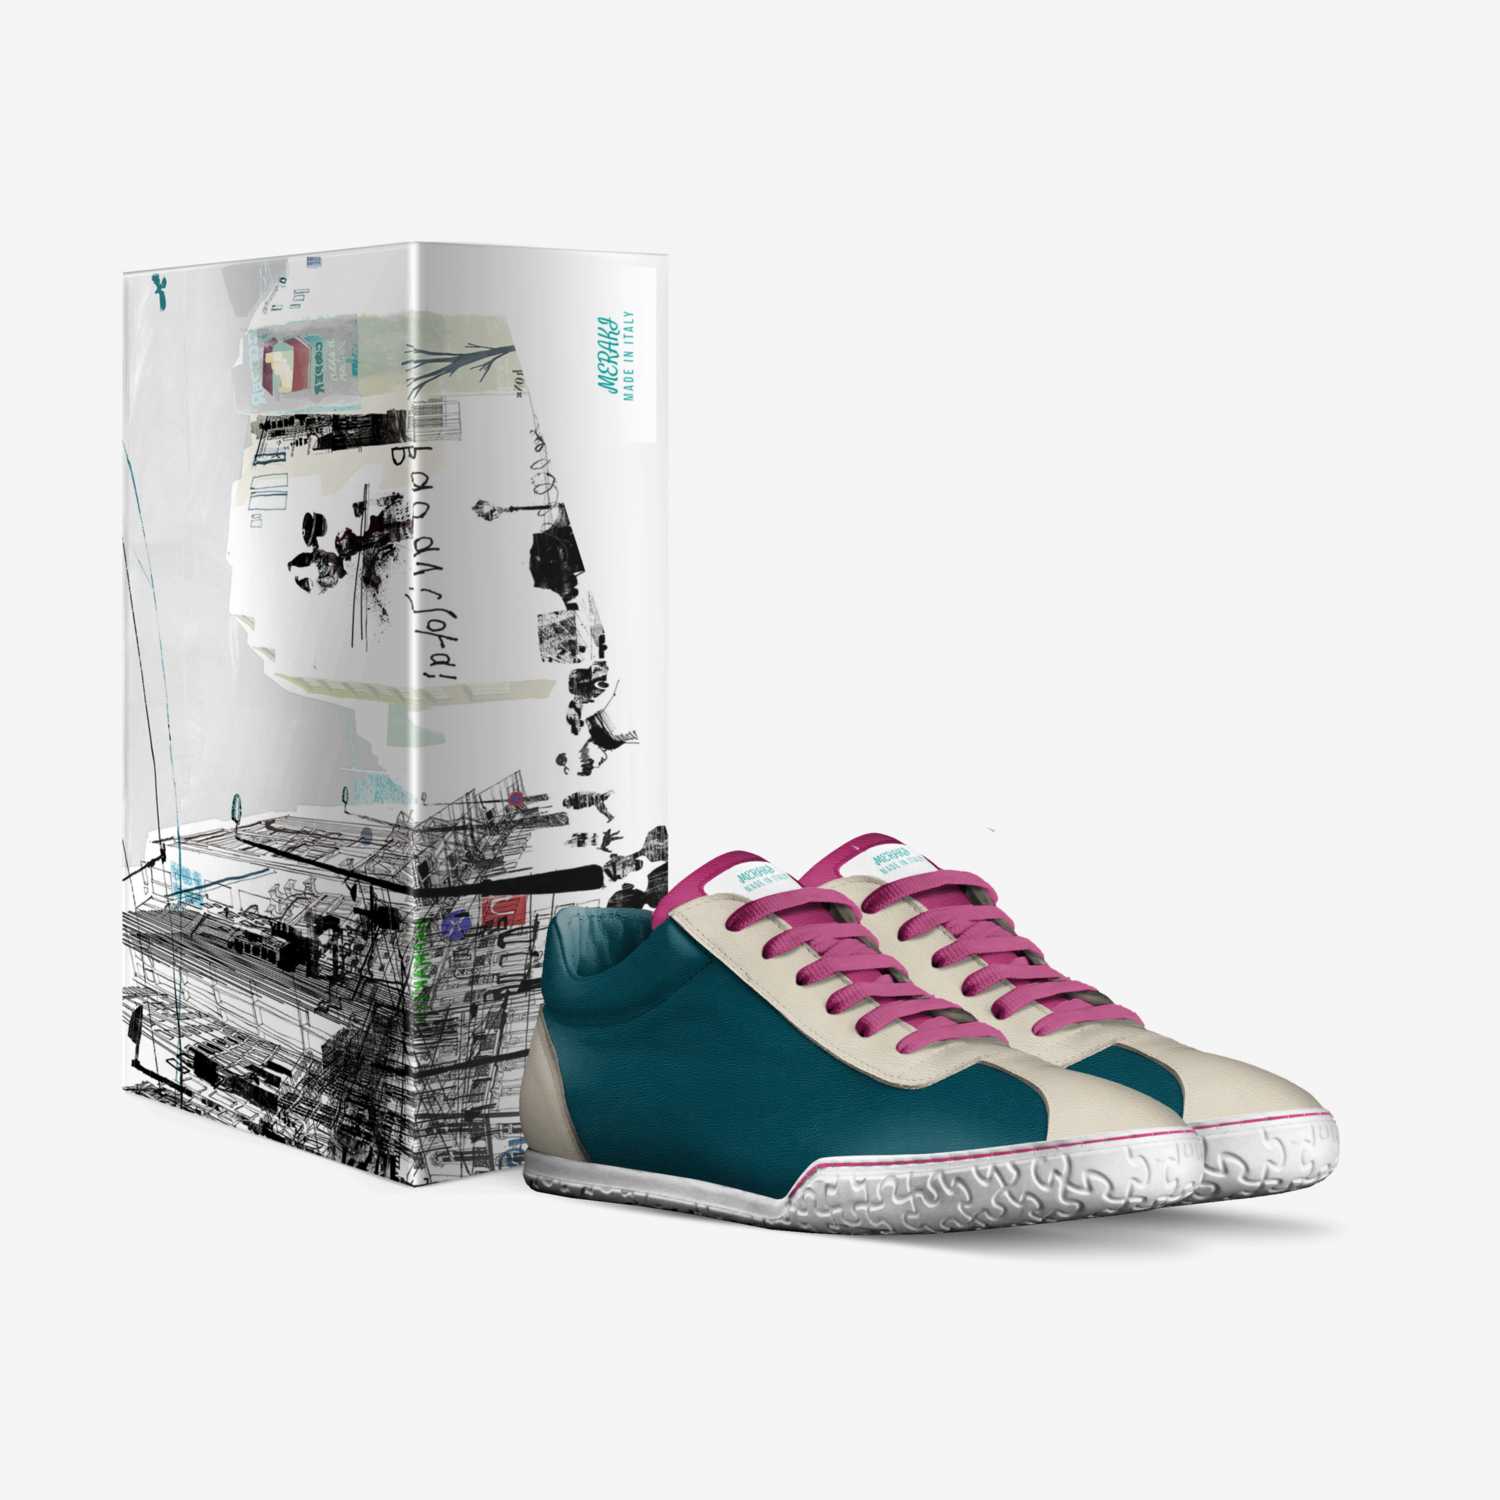 MERAKI custom made in Italy shoes by Lisa Zugarazo | Box view